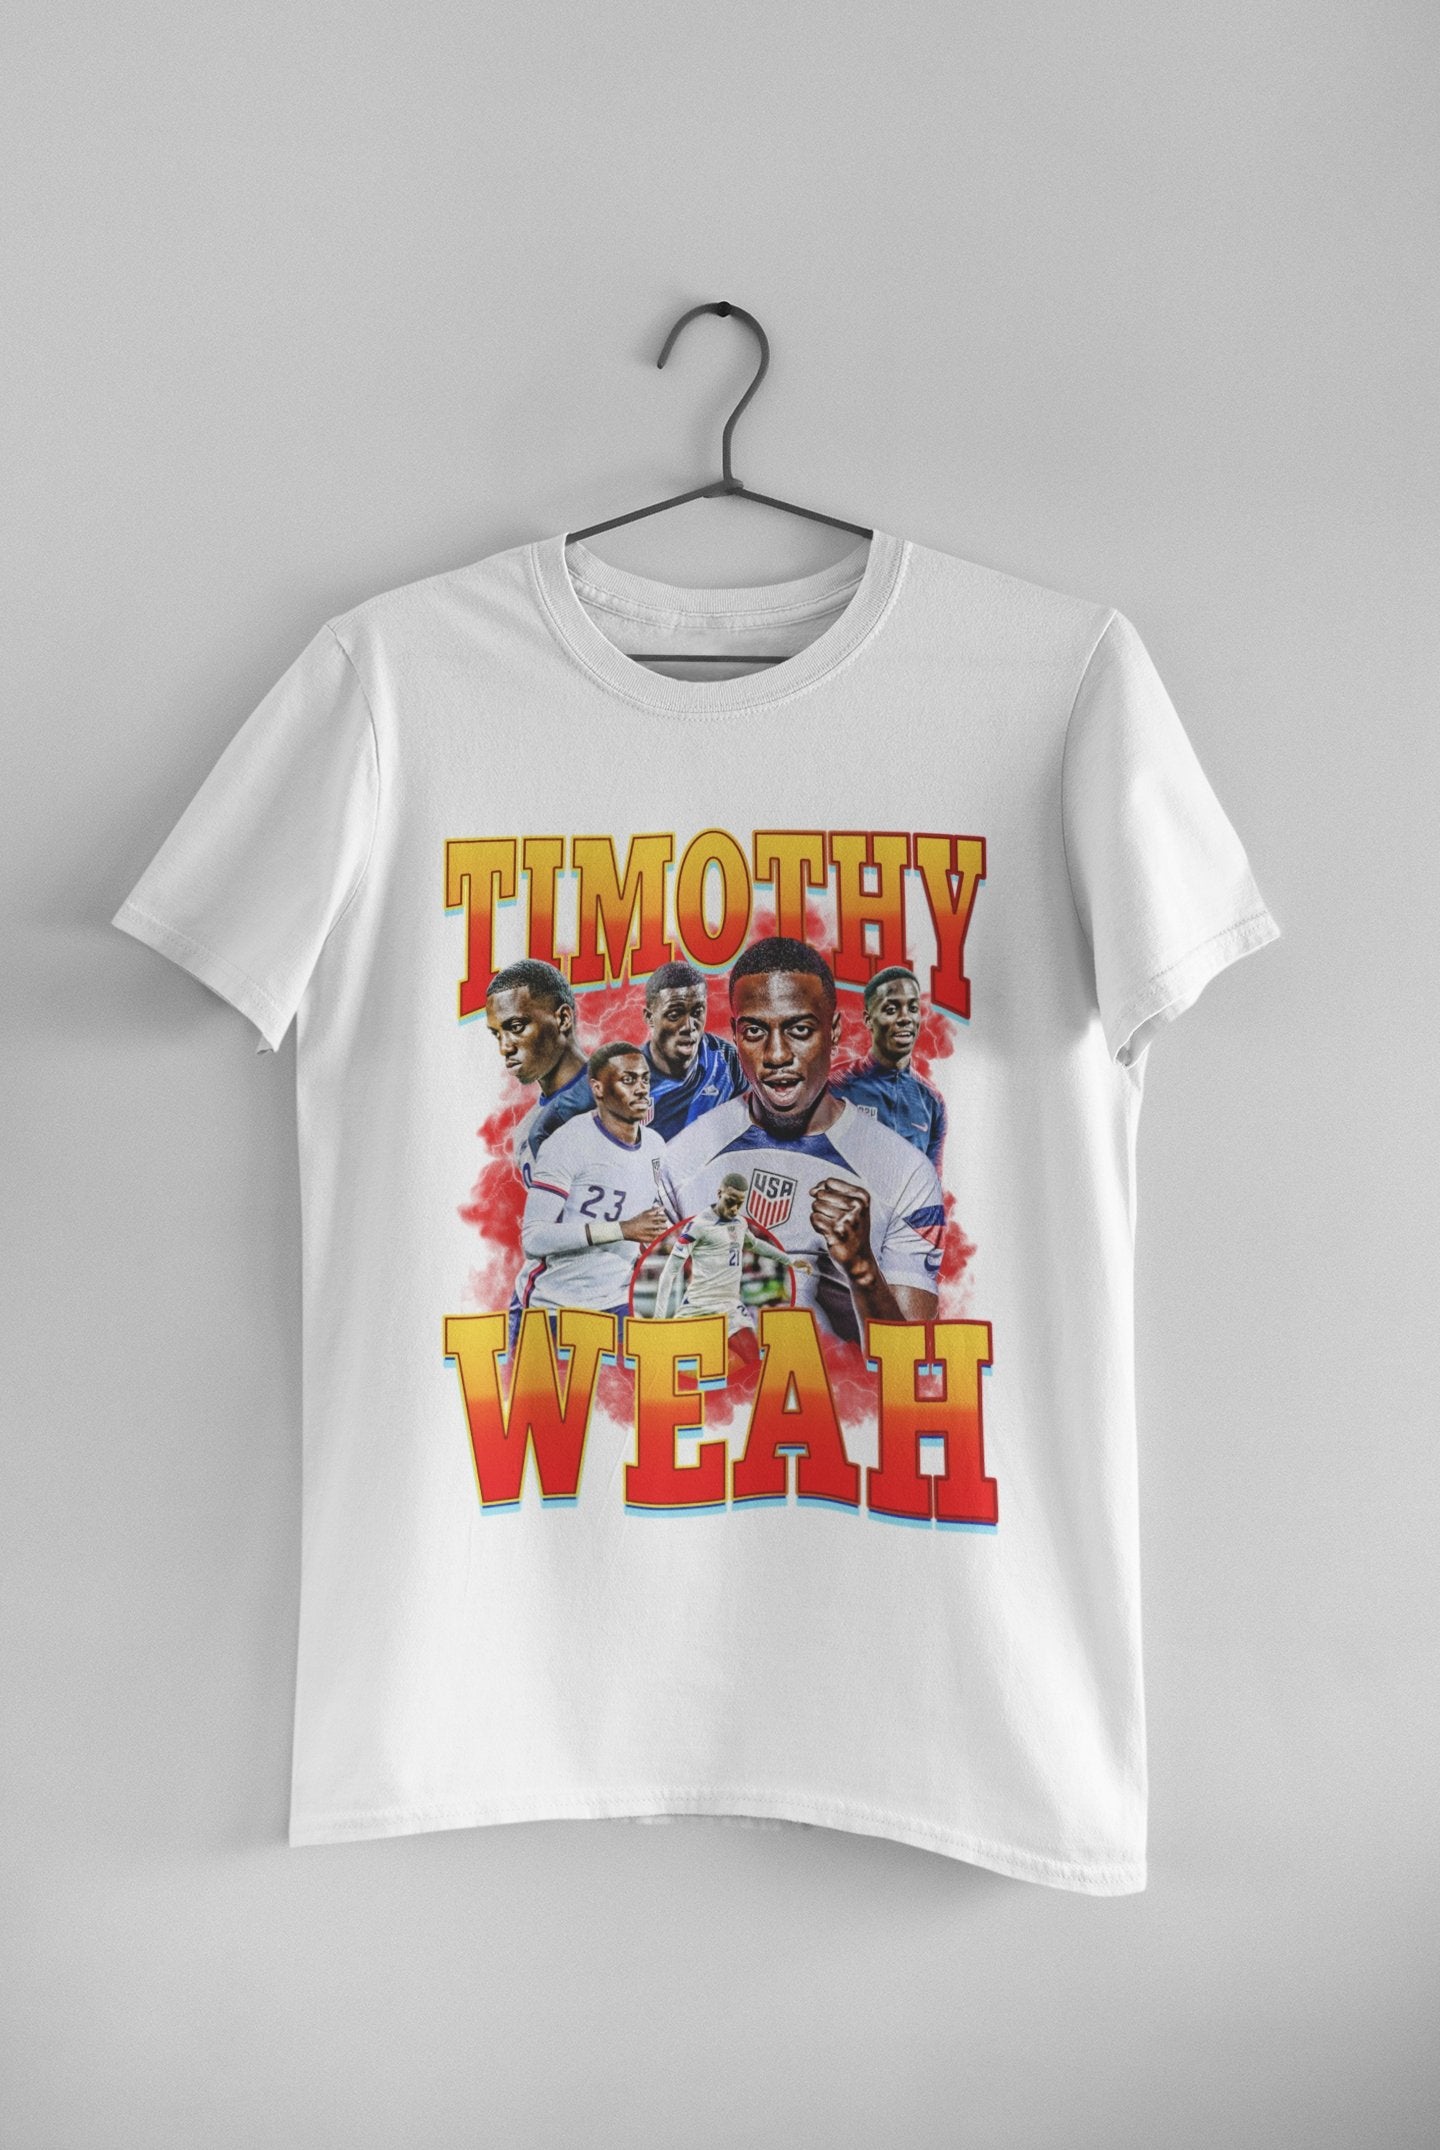 Timothy Weah - Unisex t-shirt - Modern Vintage Apparel